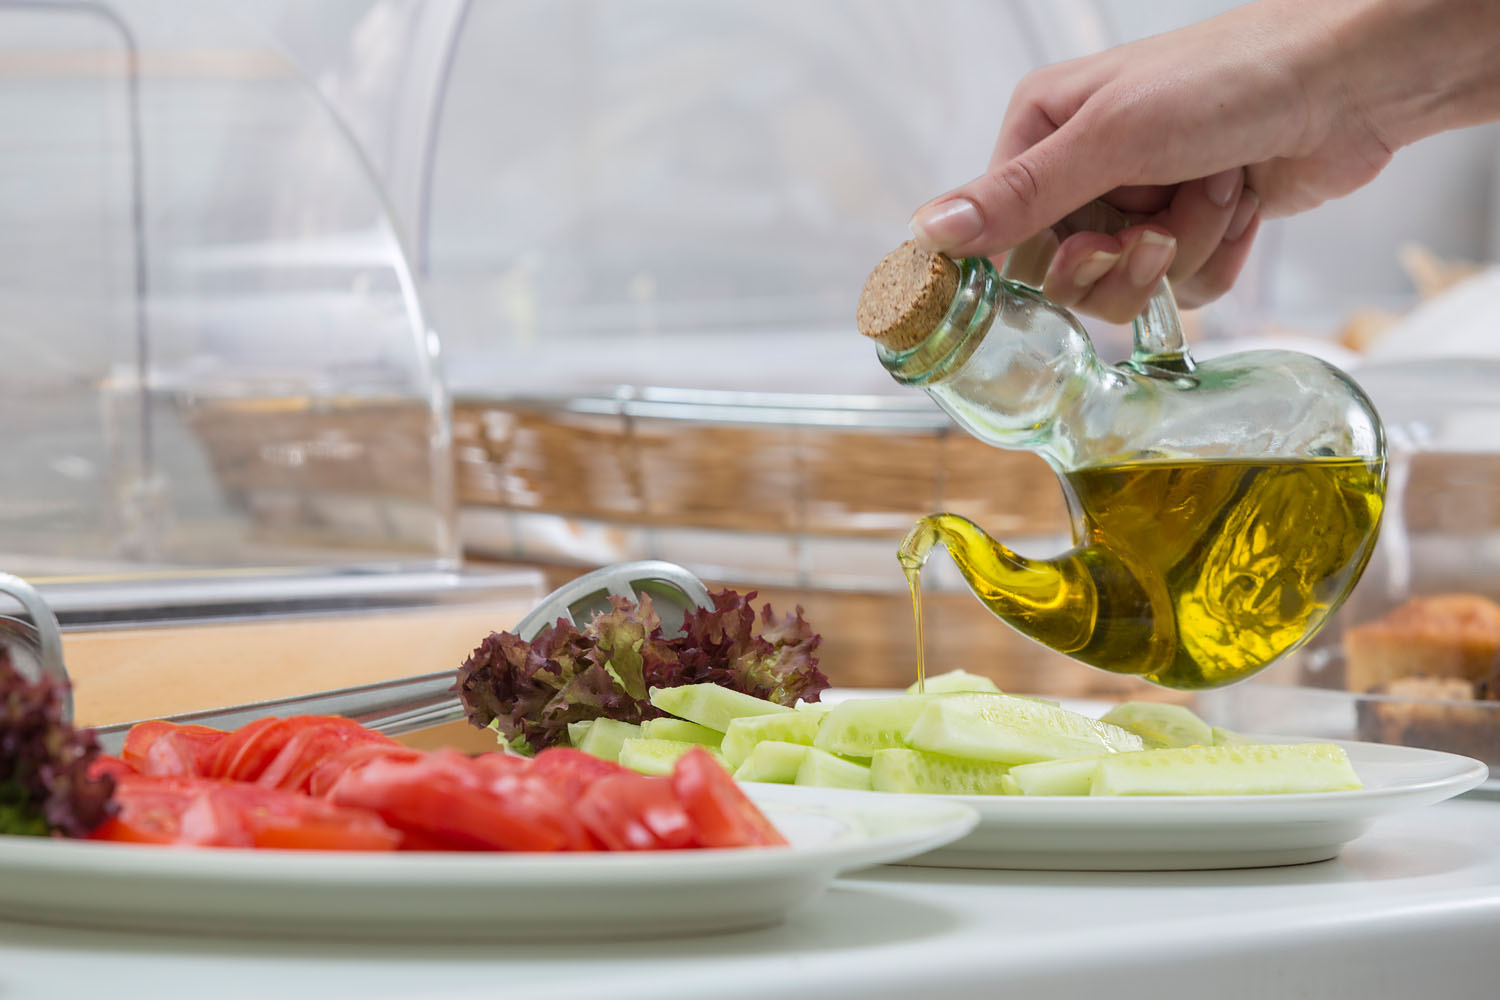 Pooring olive oil on salad